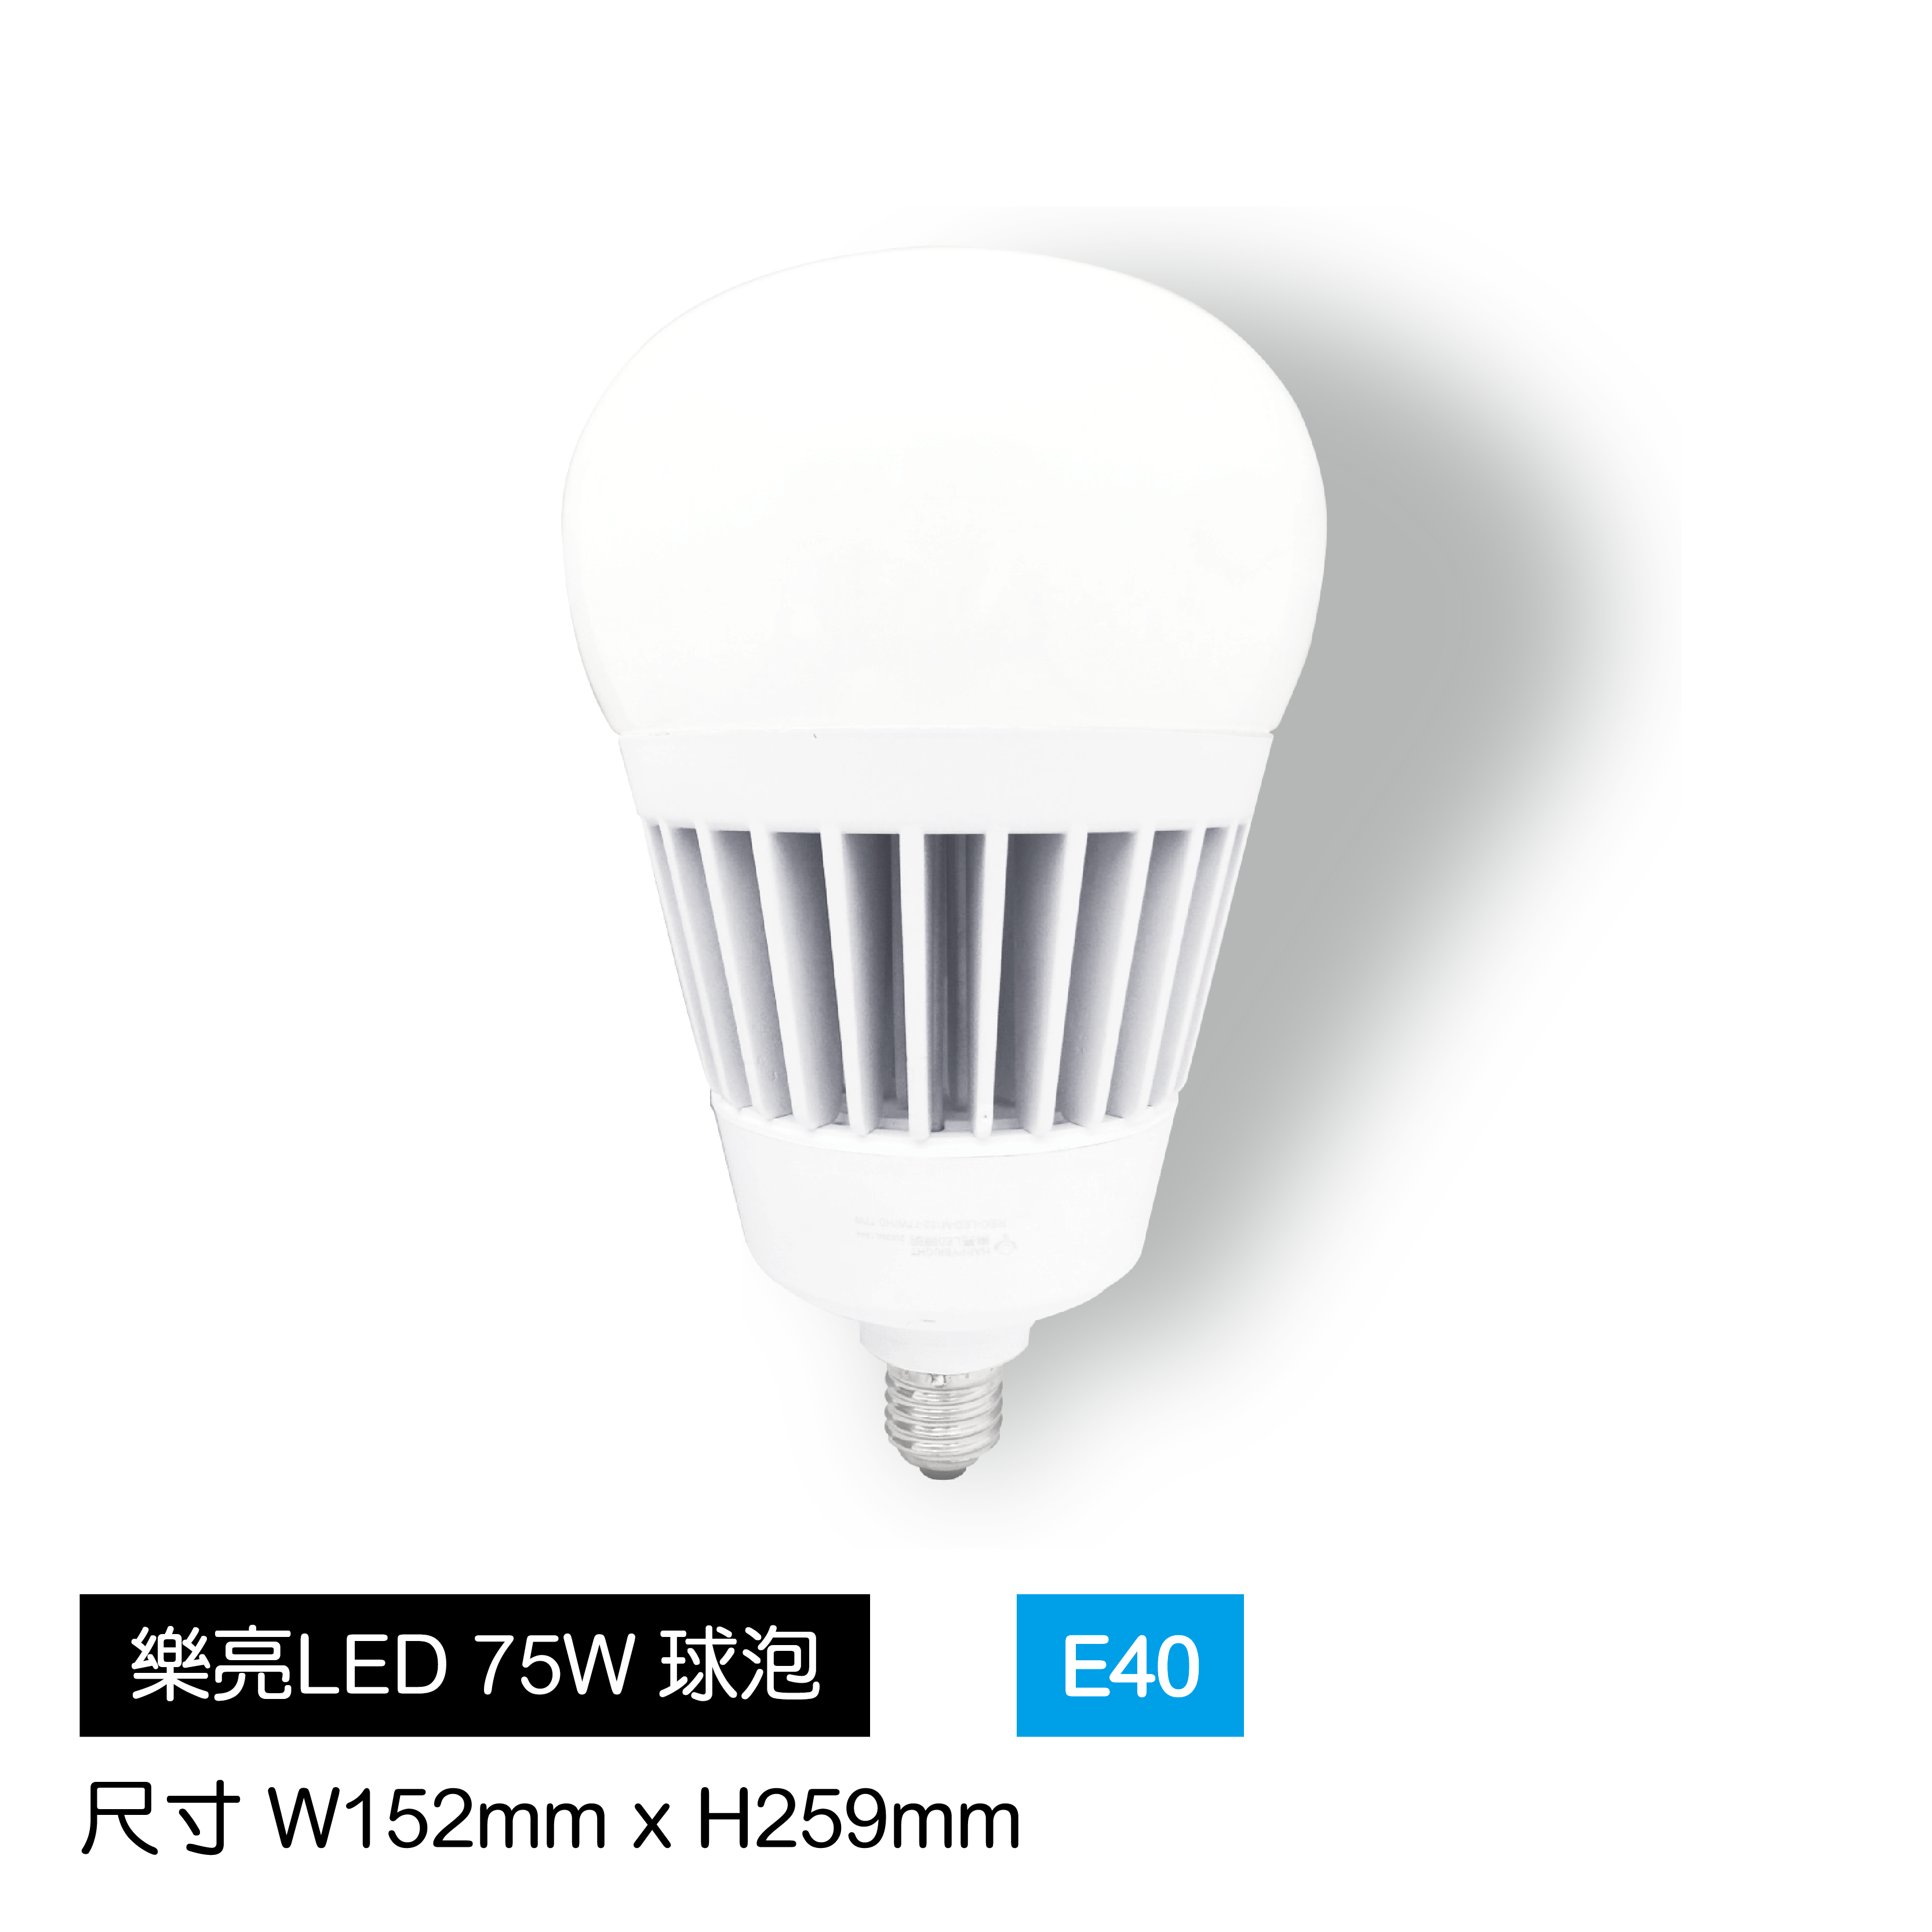 LED-75W大功率球泡-E40